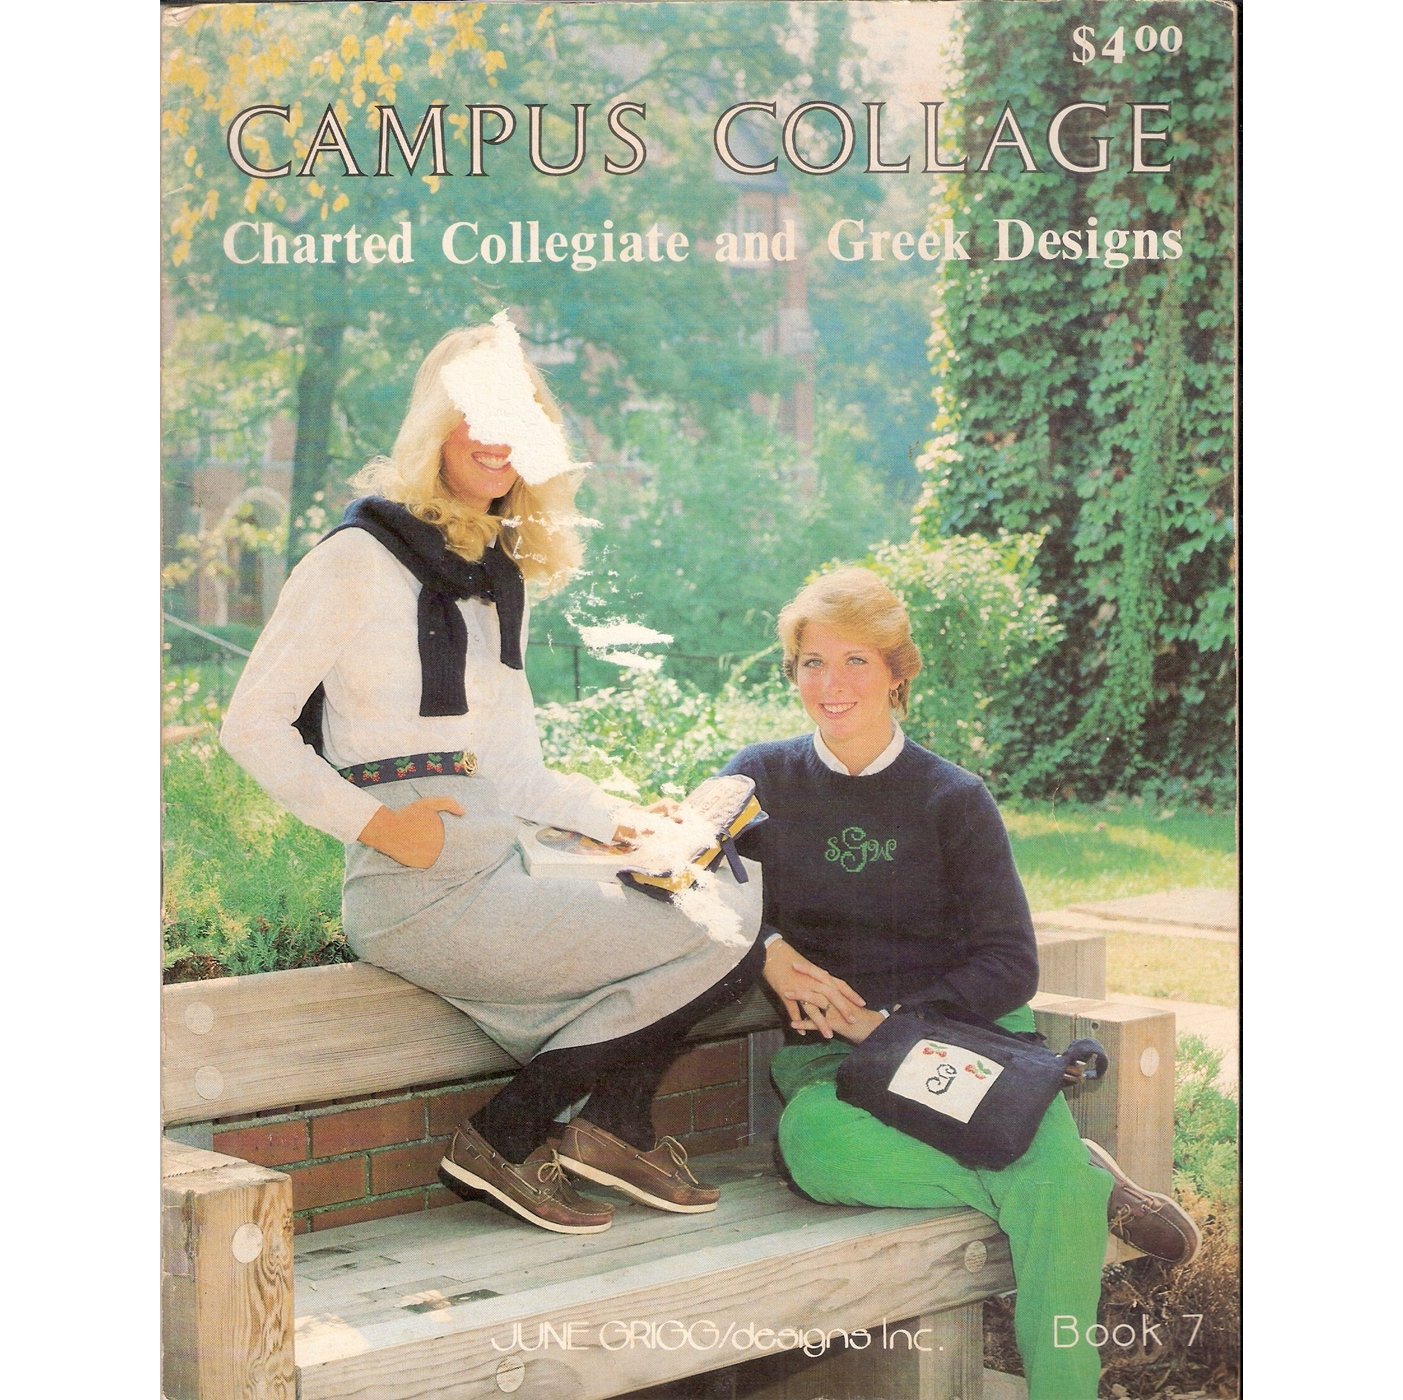 Campus Collage Charted Collegiate and Greek Designs Cross Stitch June Grigg designs Book 7 Â© 1980